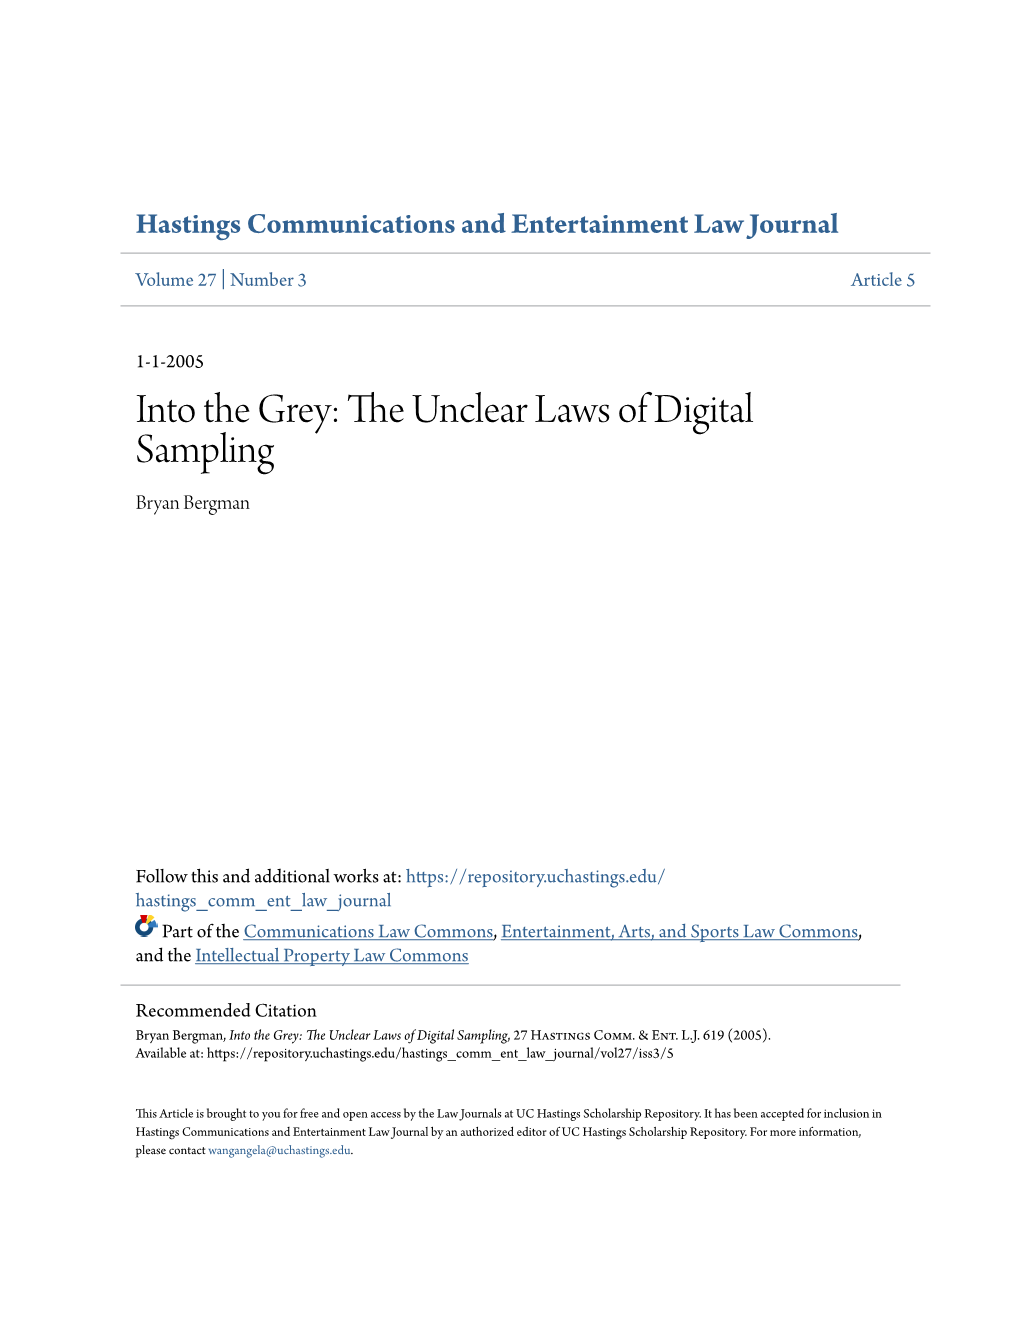 The Unclear Laws of Digital Sampling, 27 Hastings Comm